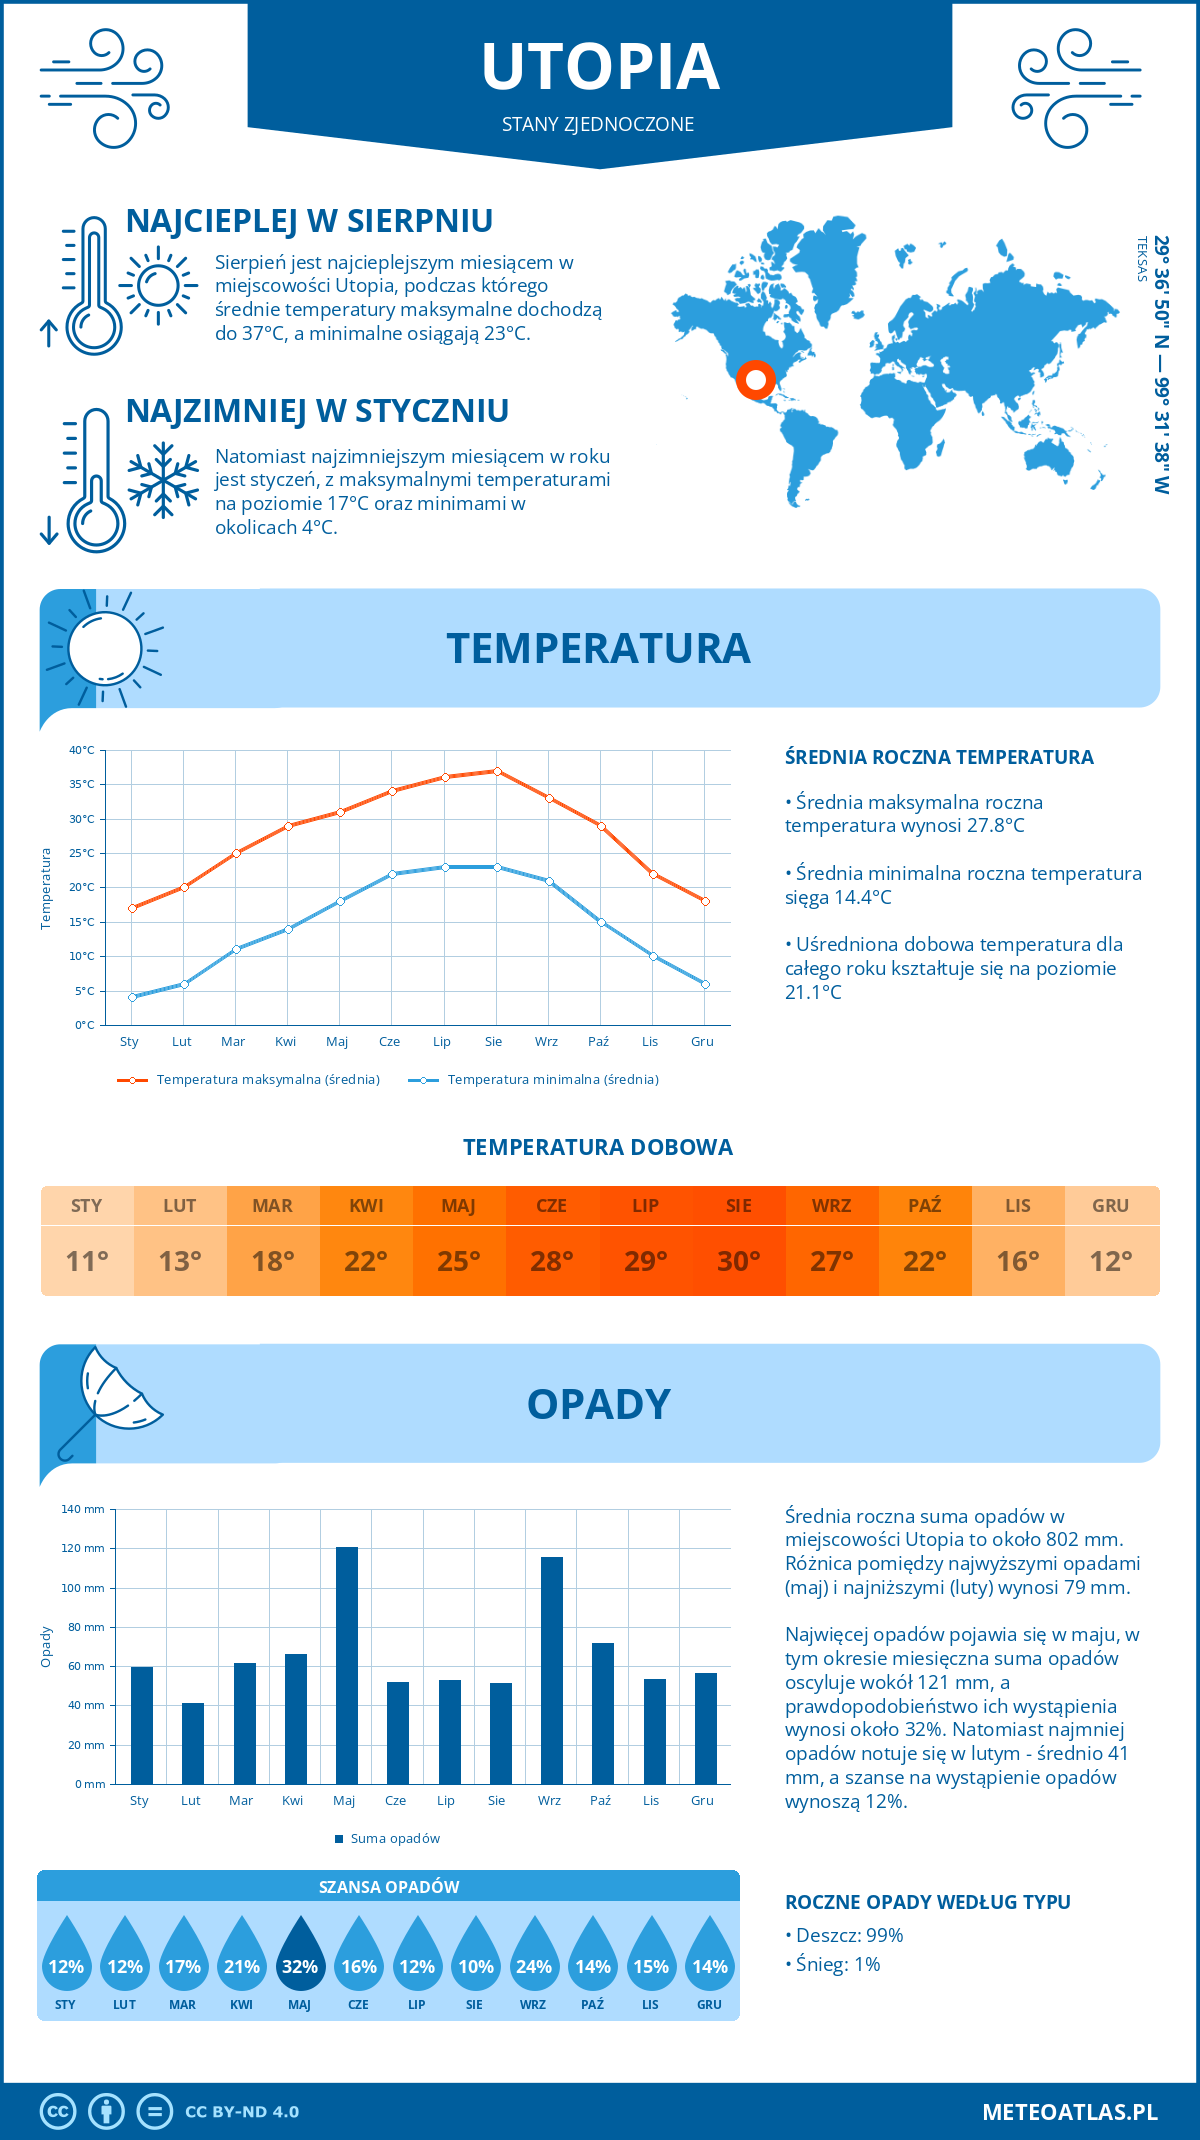 Pogoda Utopia (Stany Zjednoczone). Temperatura oraz opady.